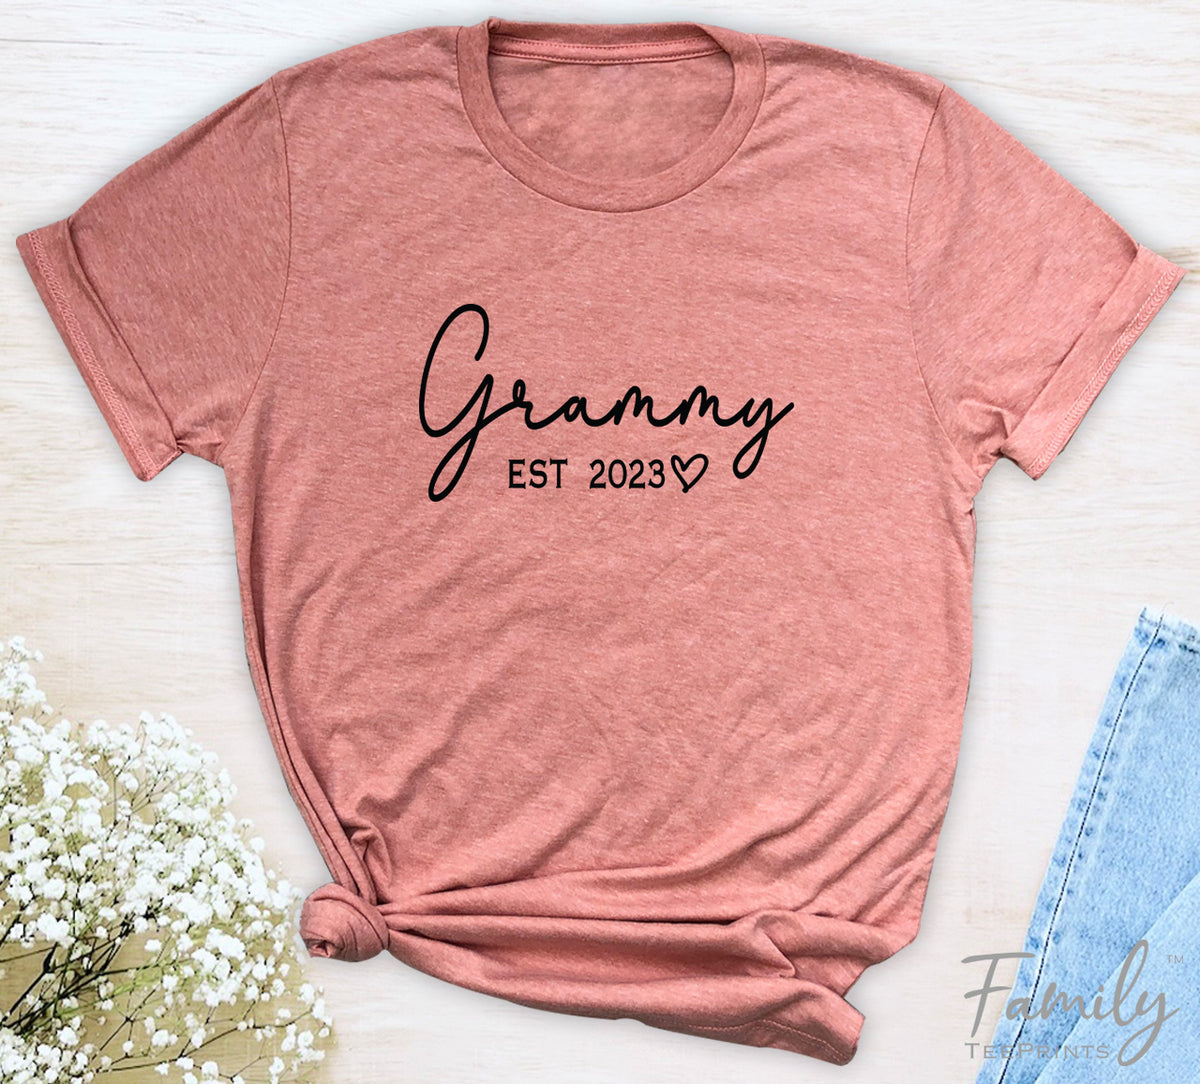 Grammy Est. 2023 - Unisex T-shirt - Grammy Shirt - Gift For Grammy To Be - familyteeprints